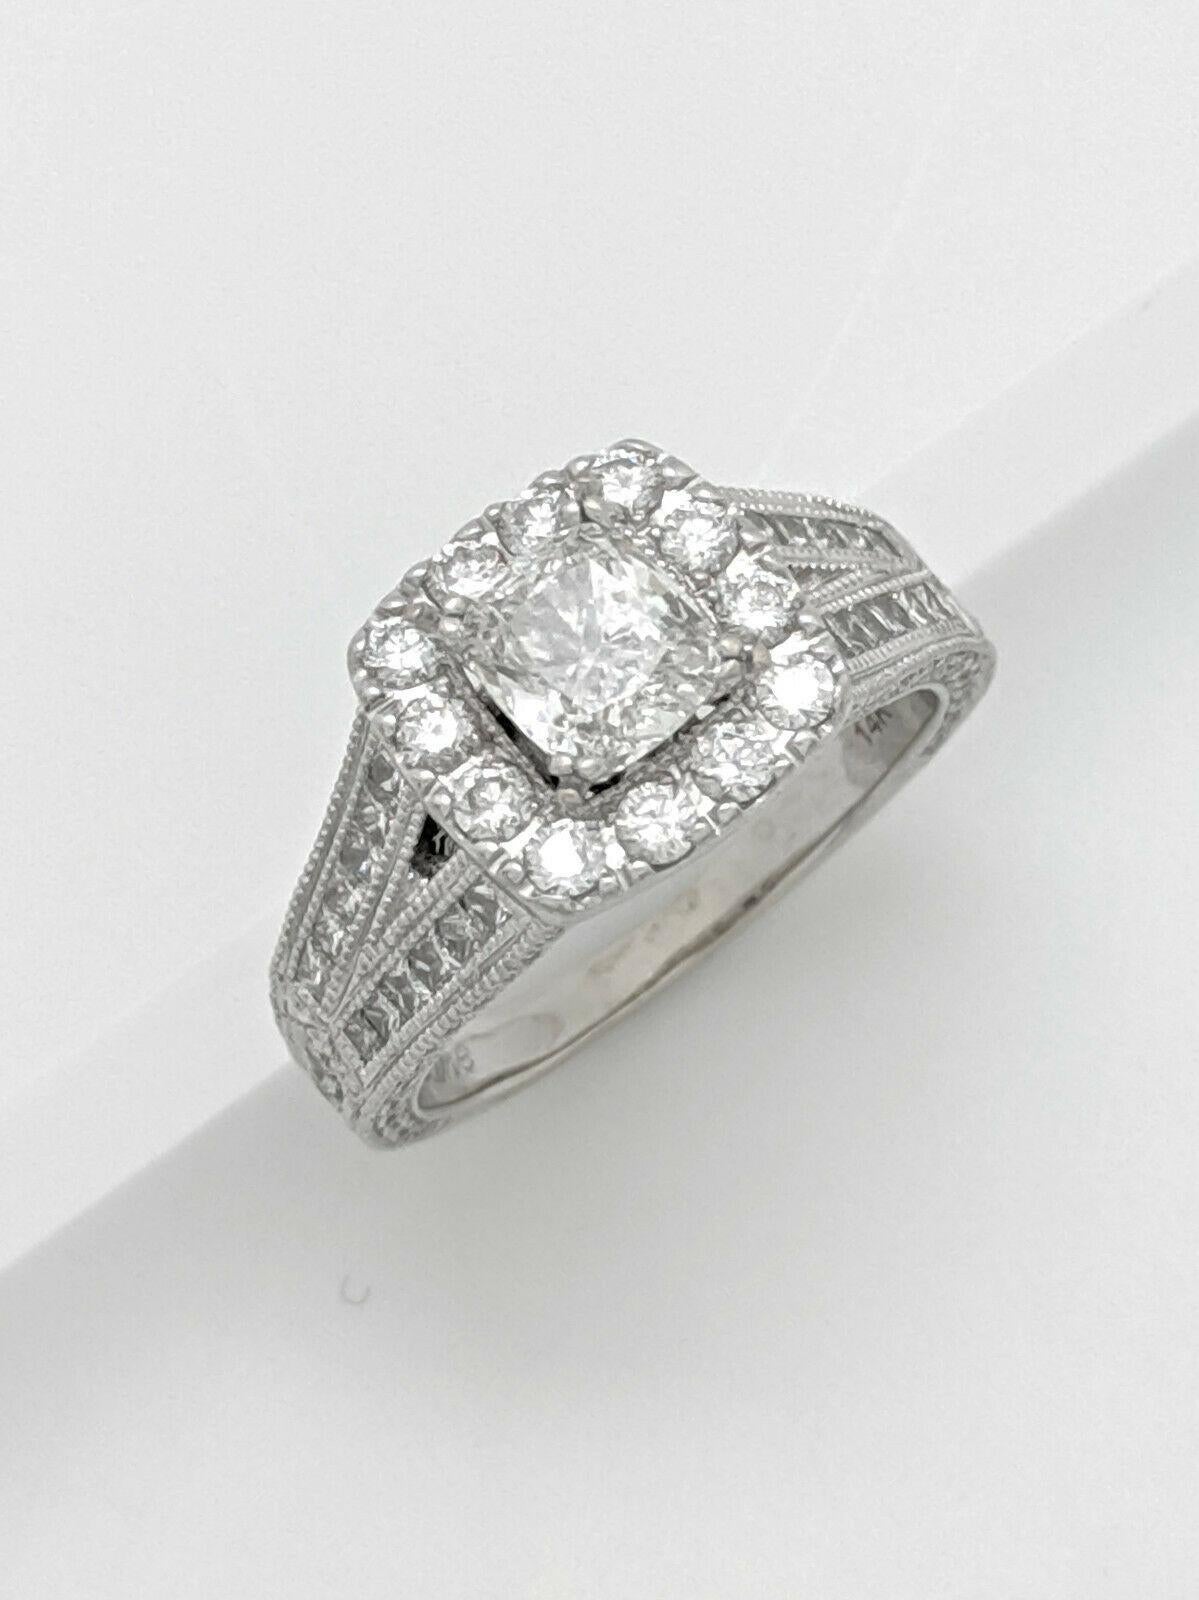 14 Karat White Gold Neil Lane 1 Carat Cushion Cut Diamond Ring 2 Carat In Good Condition For Sale In Gainesville, FL